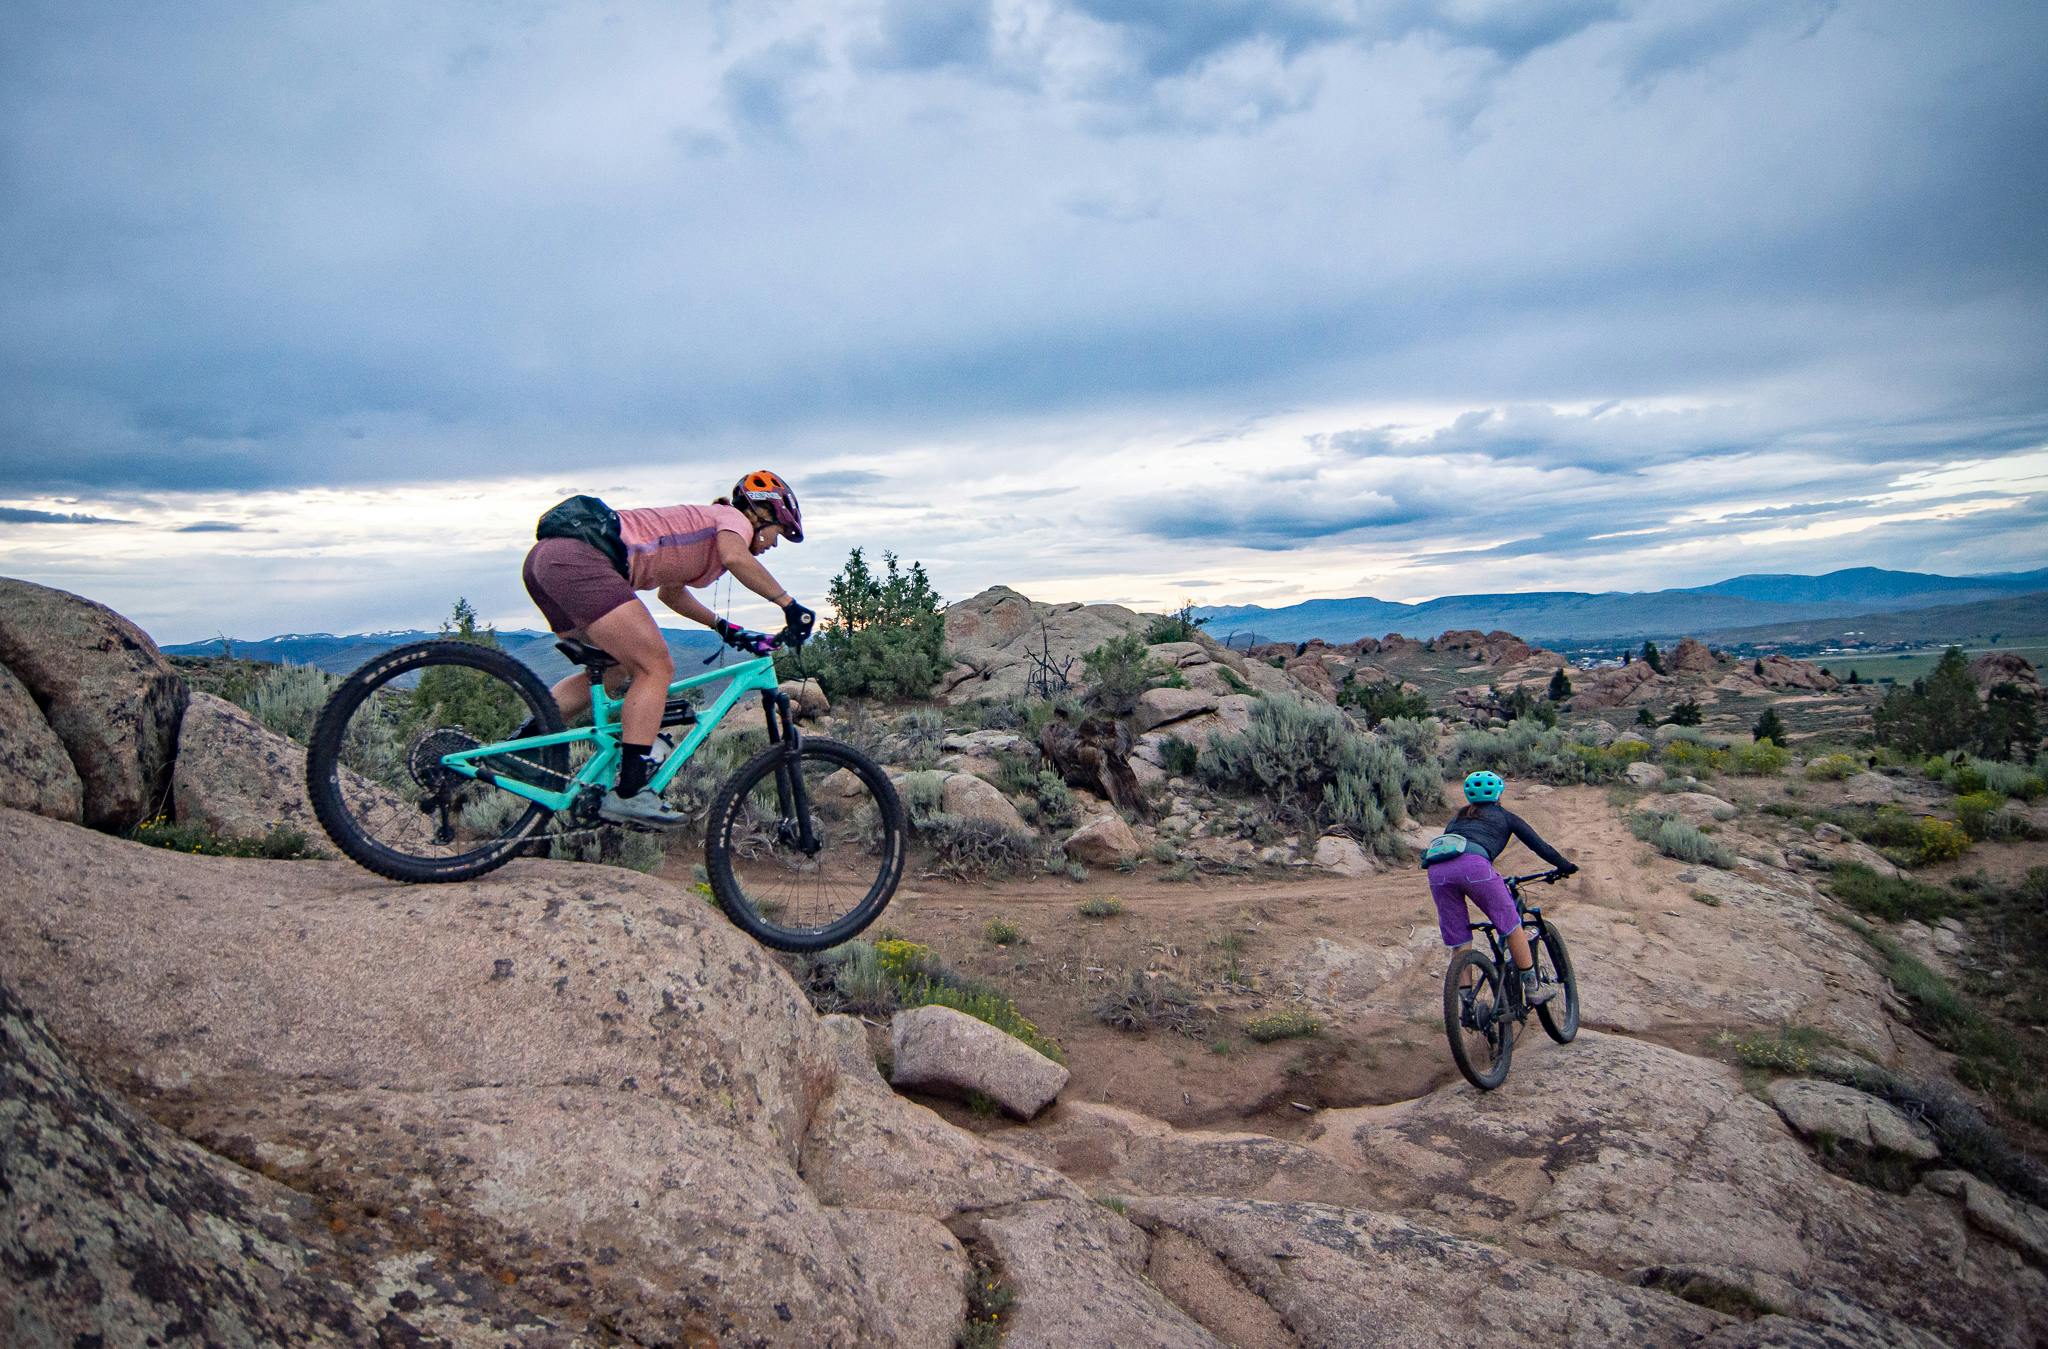 Two women on mountain bikes adventuring through a rocky desert landscape.